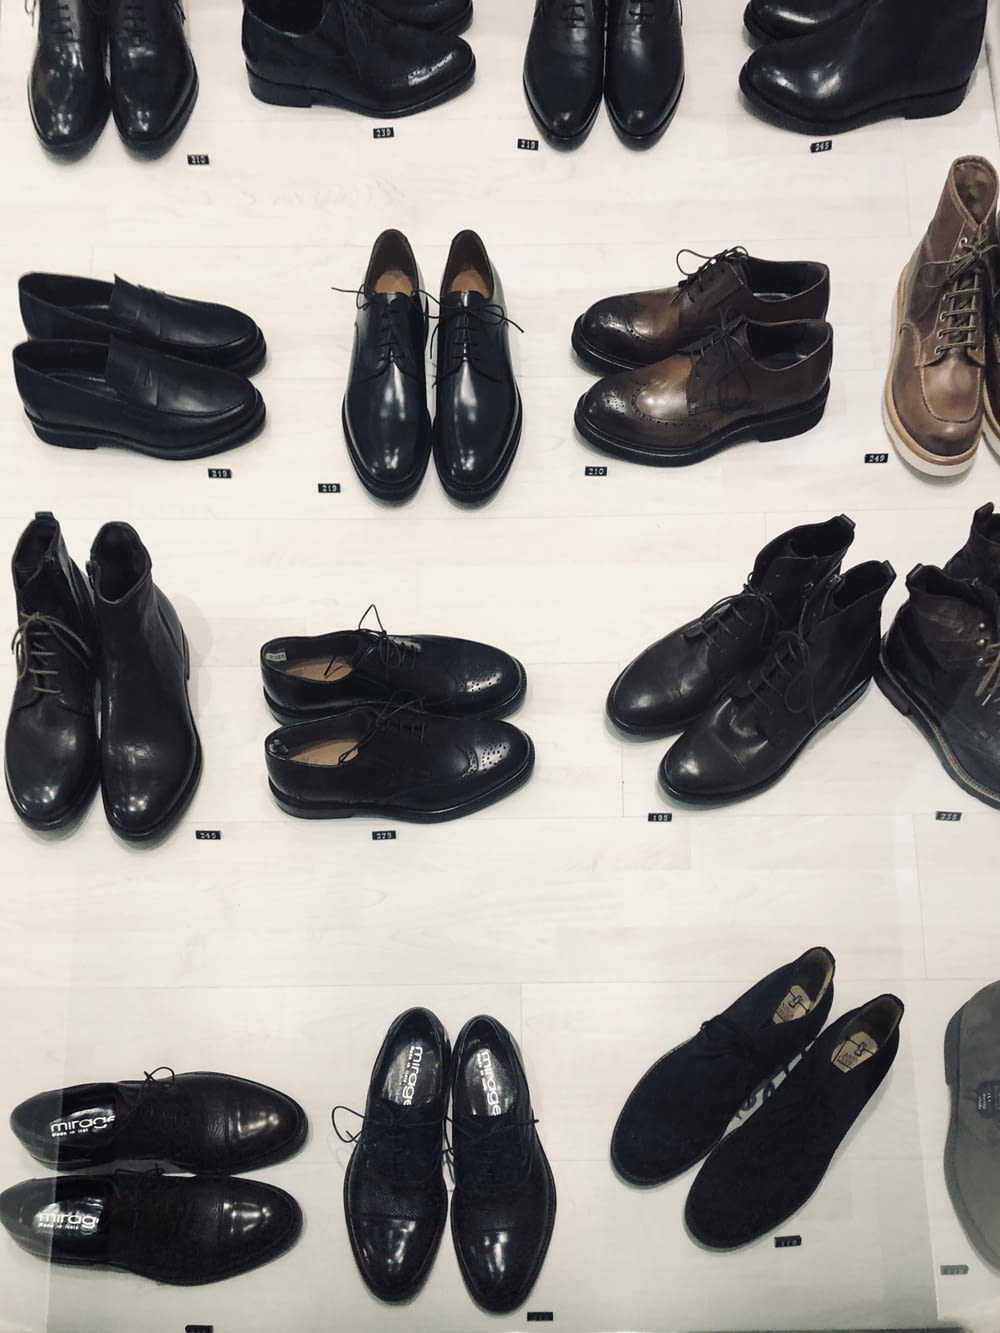 black leather dress shoes on white floor tiles